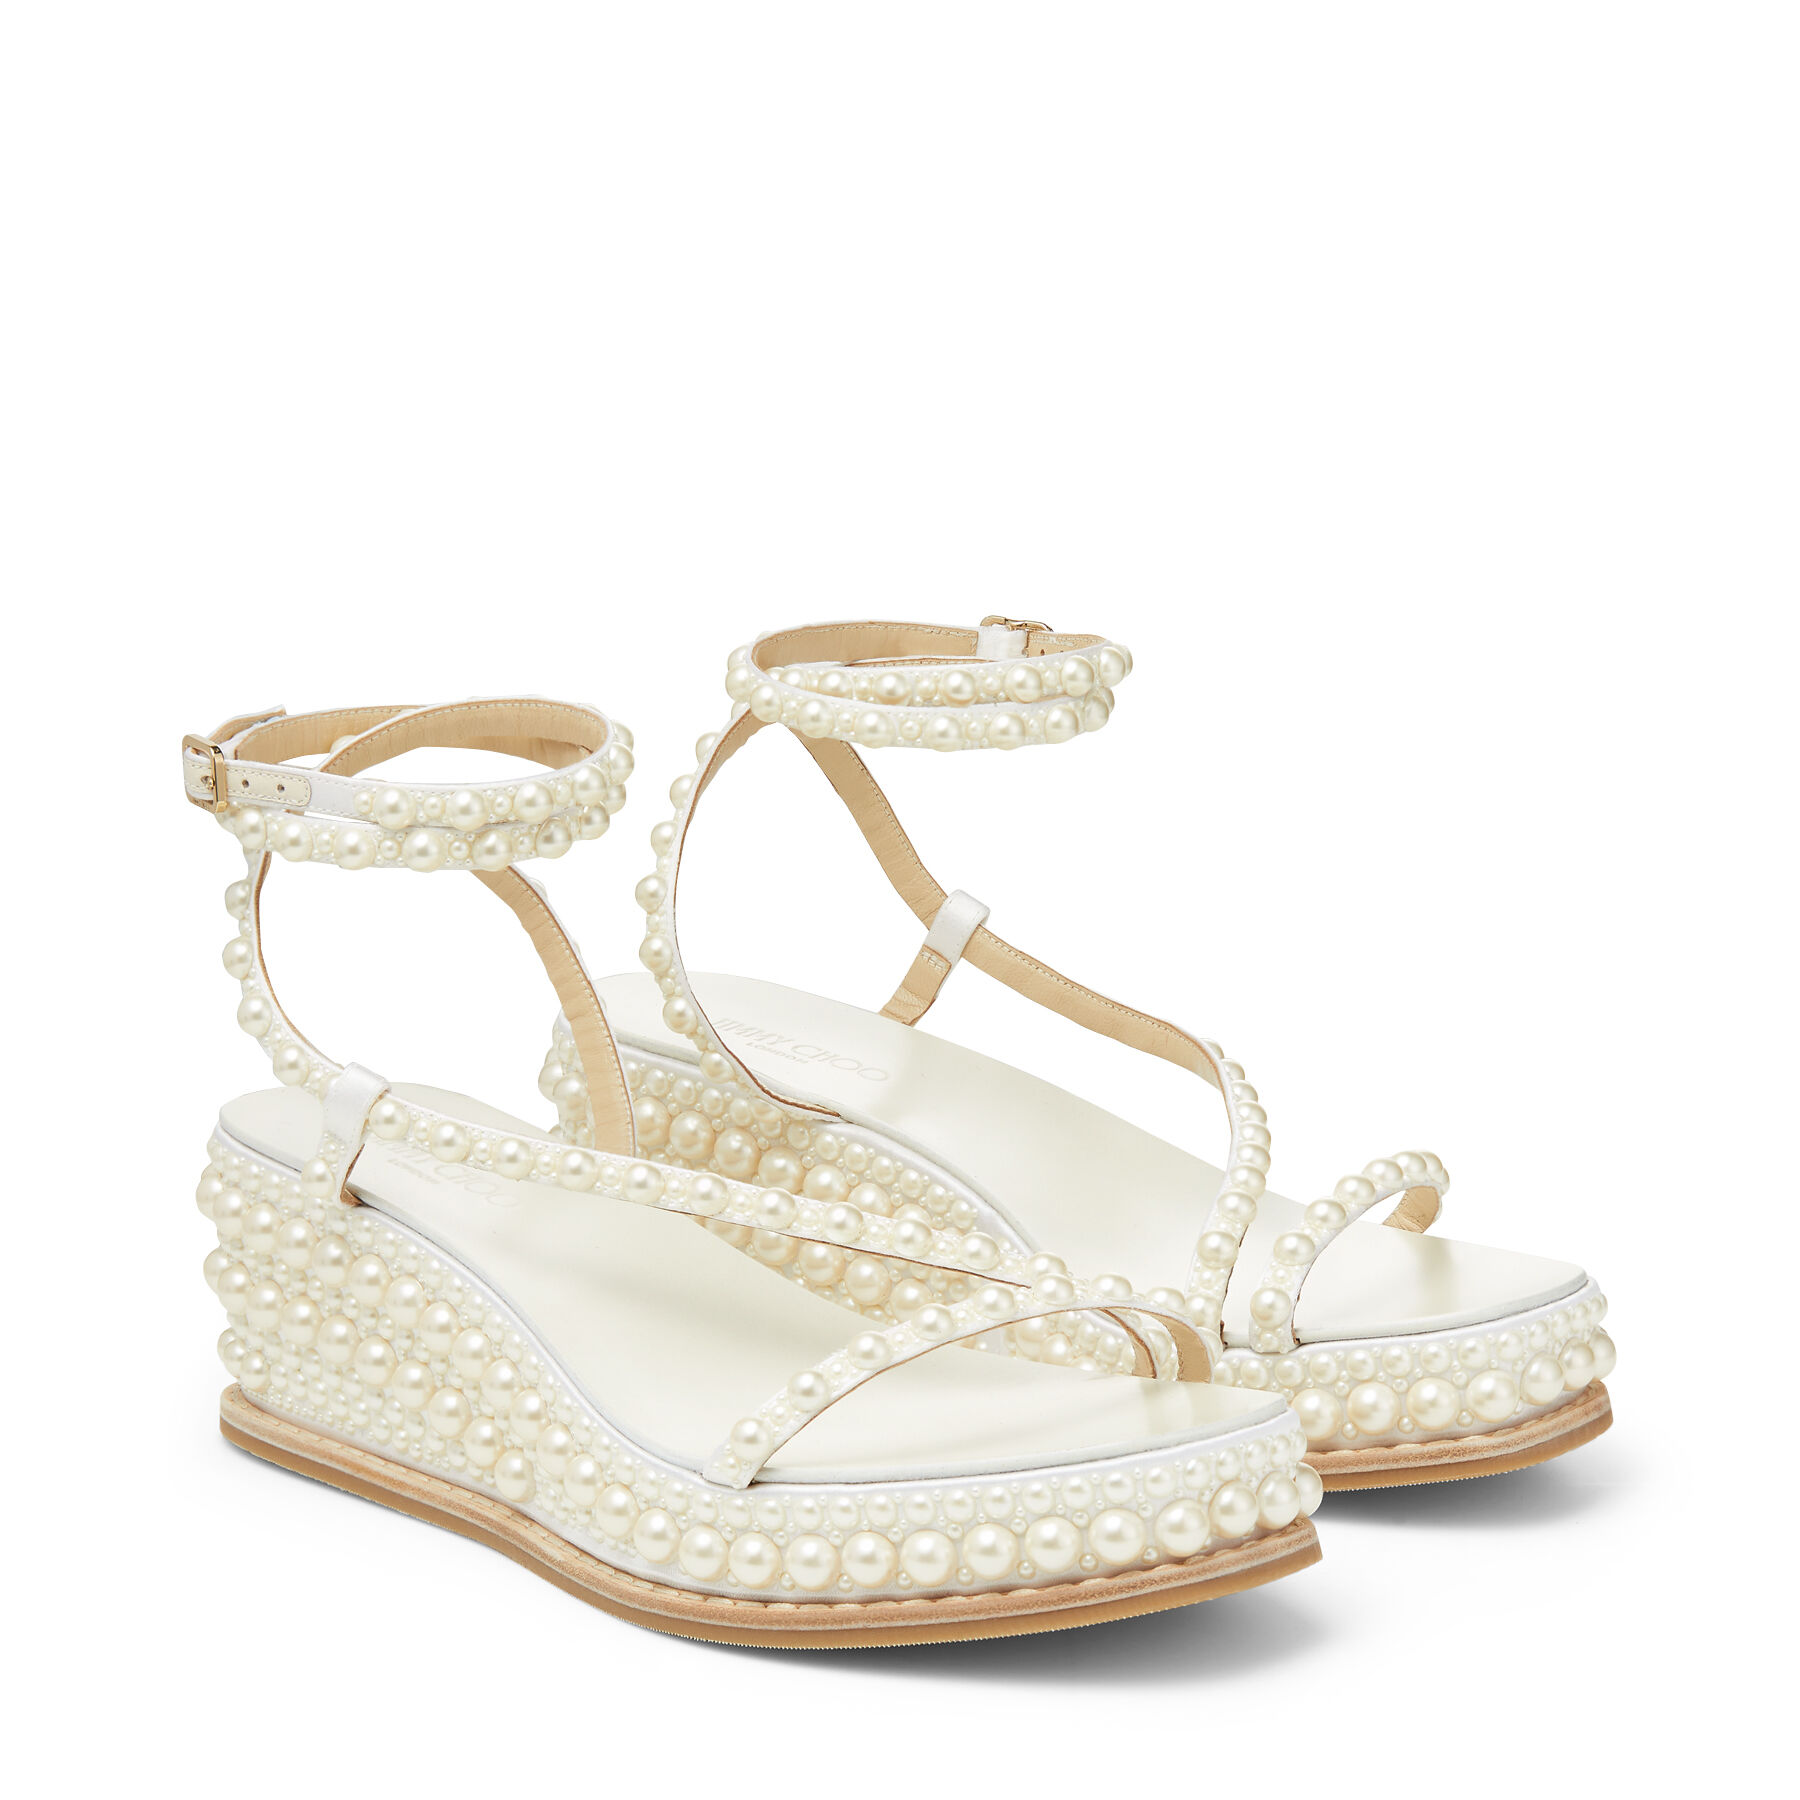 White Satin Wedge Sandals with Pearl Embellishment | DRIVE 60 | High Summer 2021 | JIMMY CHOO